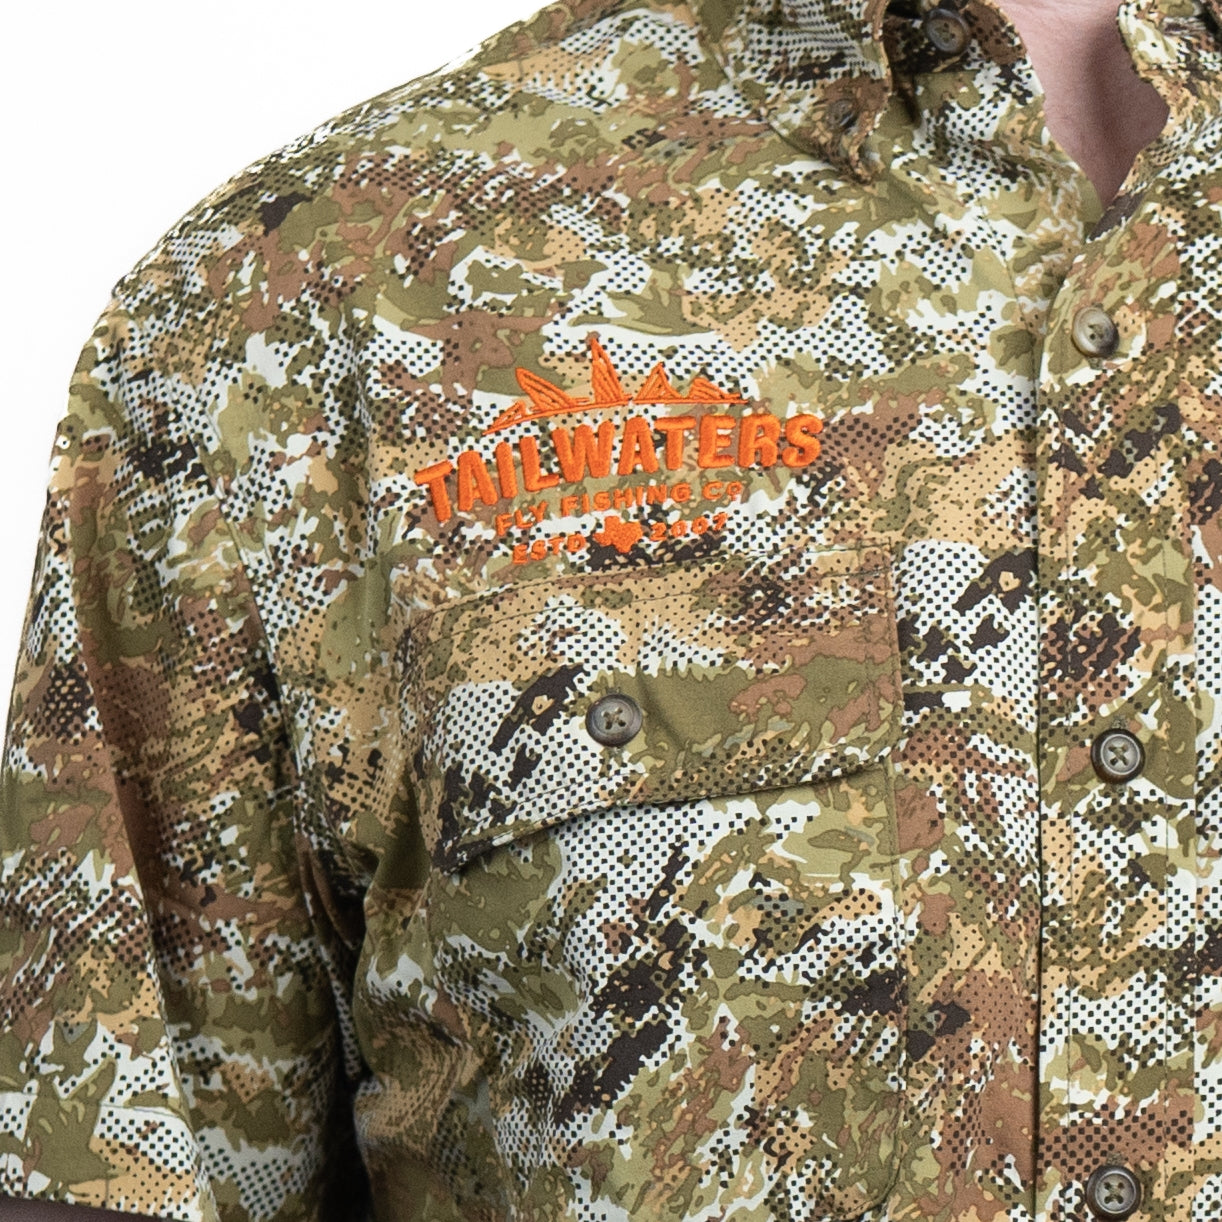 Duck Camp Tailwaters Logo Lightweight Hunting Short Sleeve Shirt